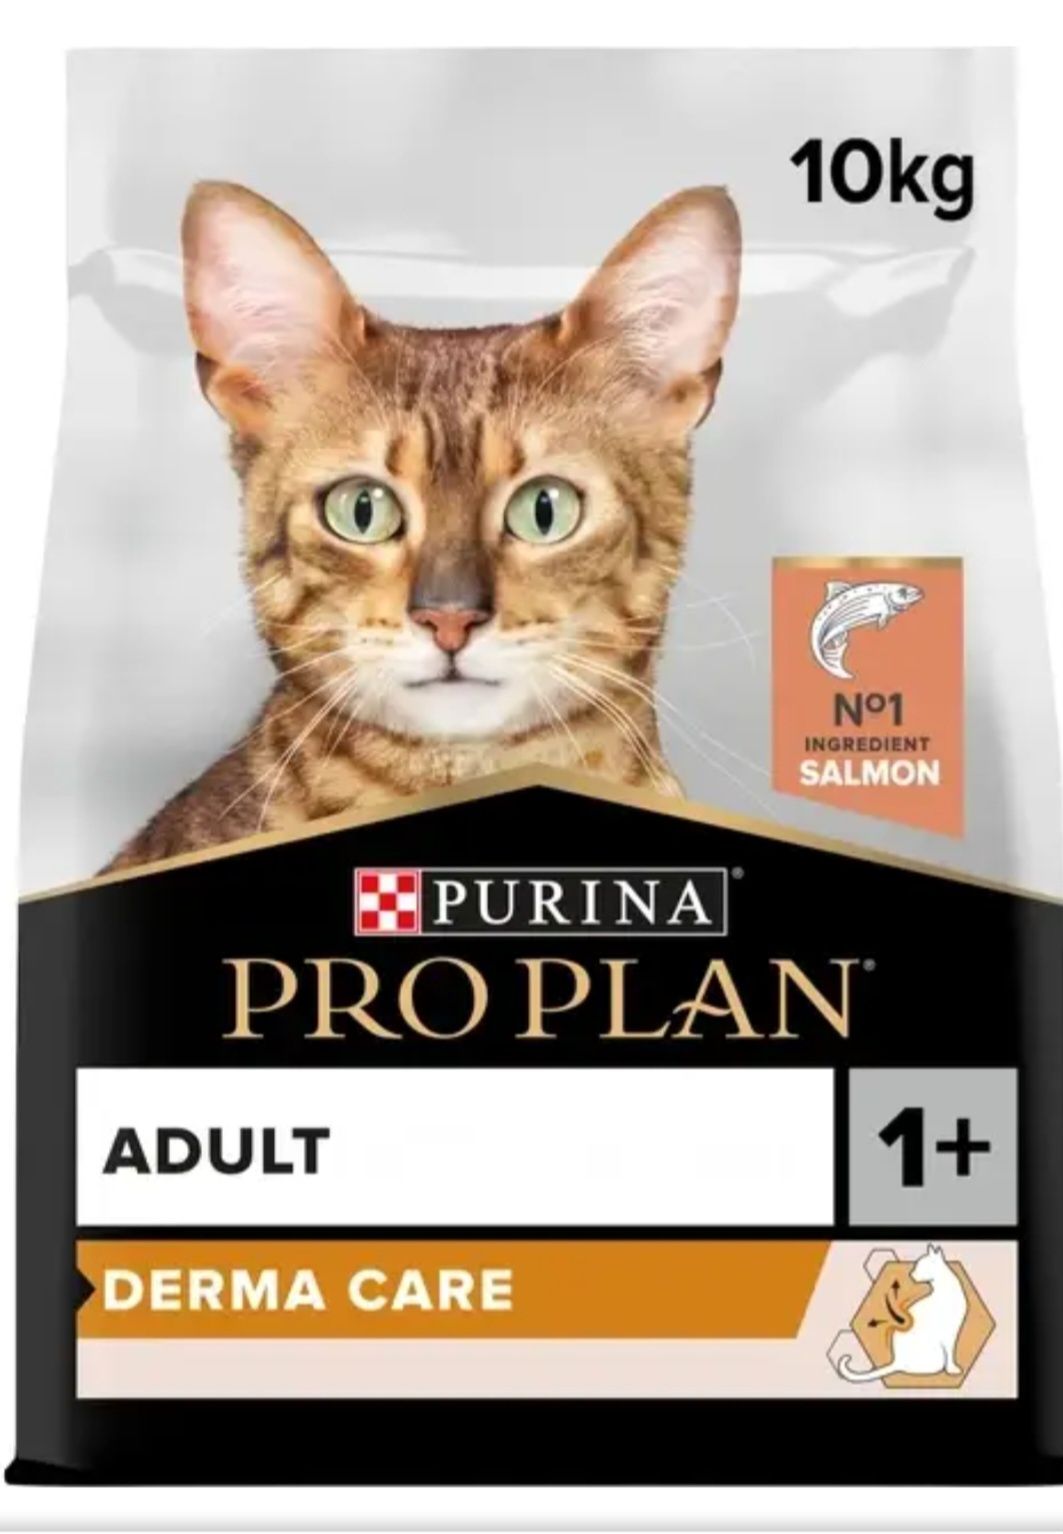 Purina Pro Plan Cat Adult Elegant Salmon (10 кг) Проплан Элегант